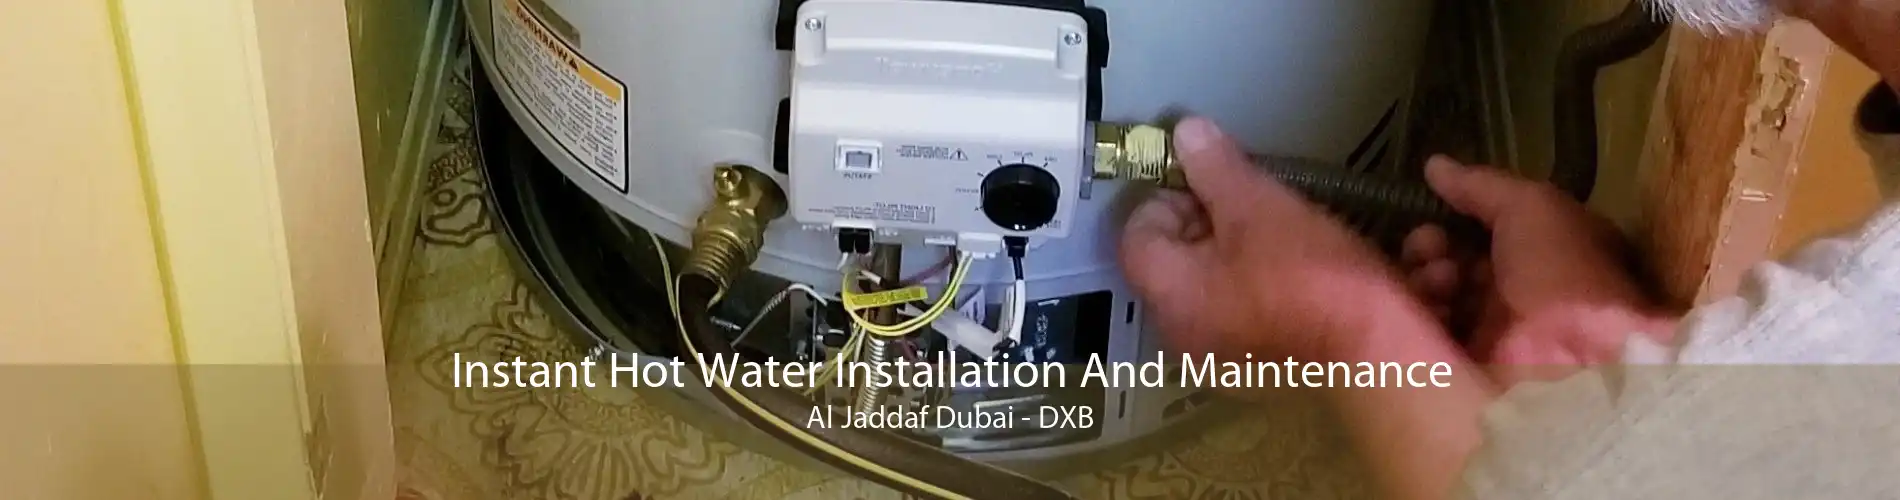 Instant Hot Water Installation And Maintenance Al Jaddaf Dubai - DXB